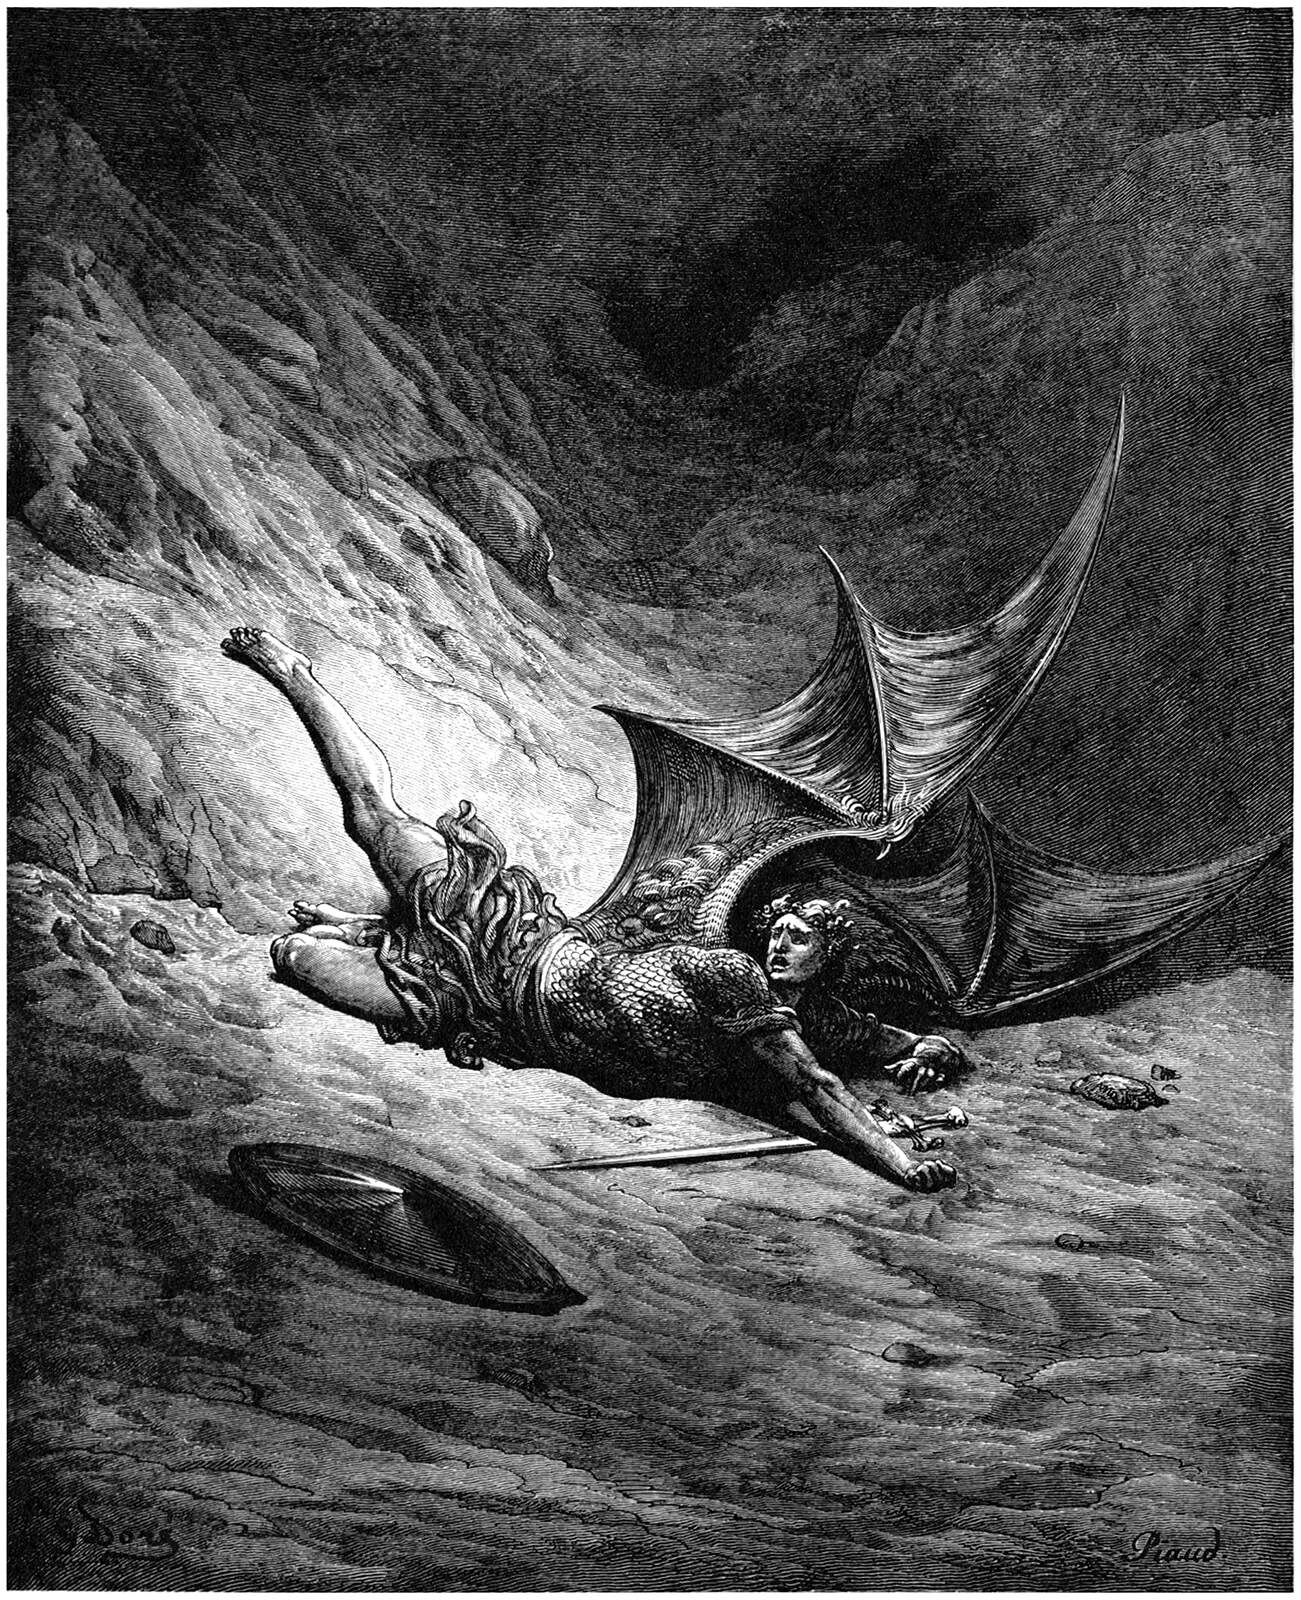 Satan Knew Pain | Old Book Illustrations